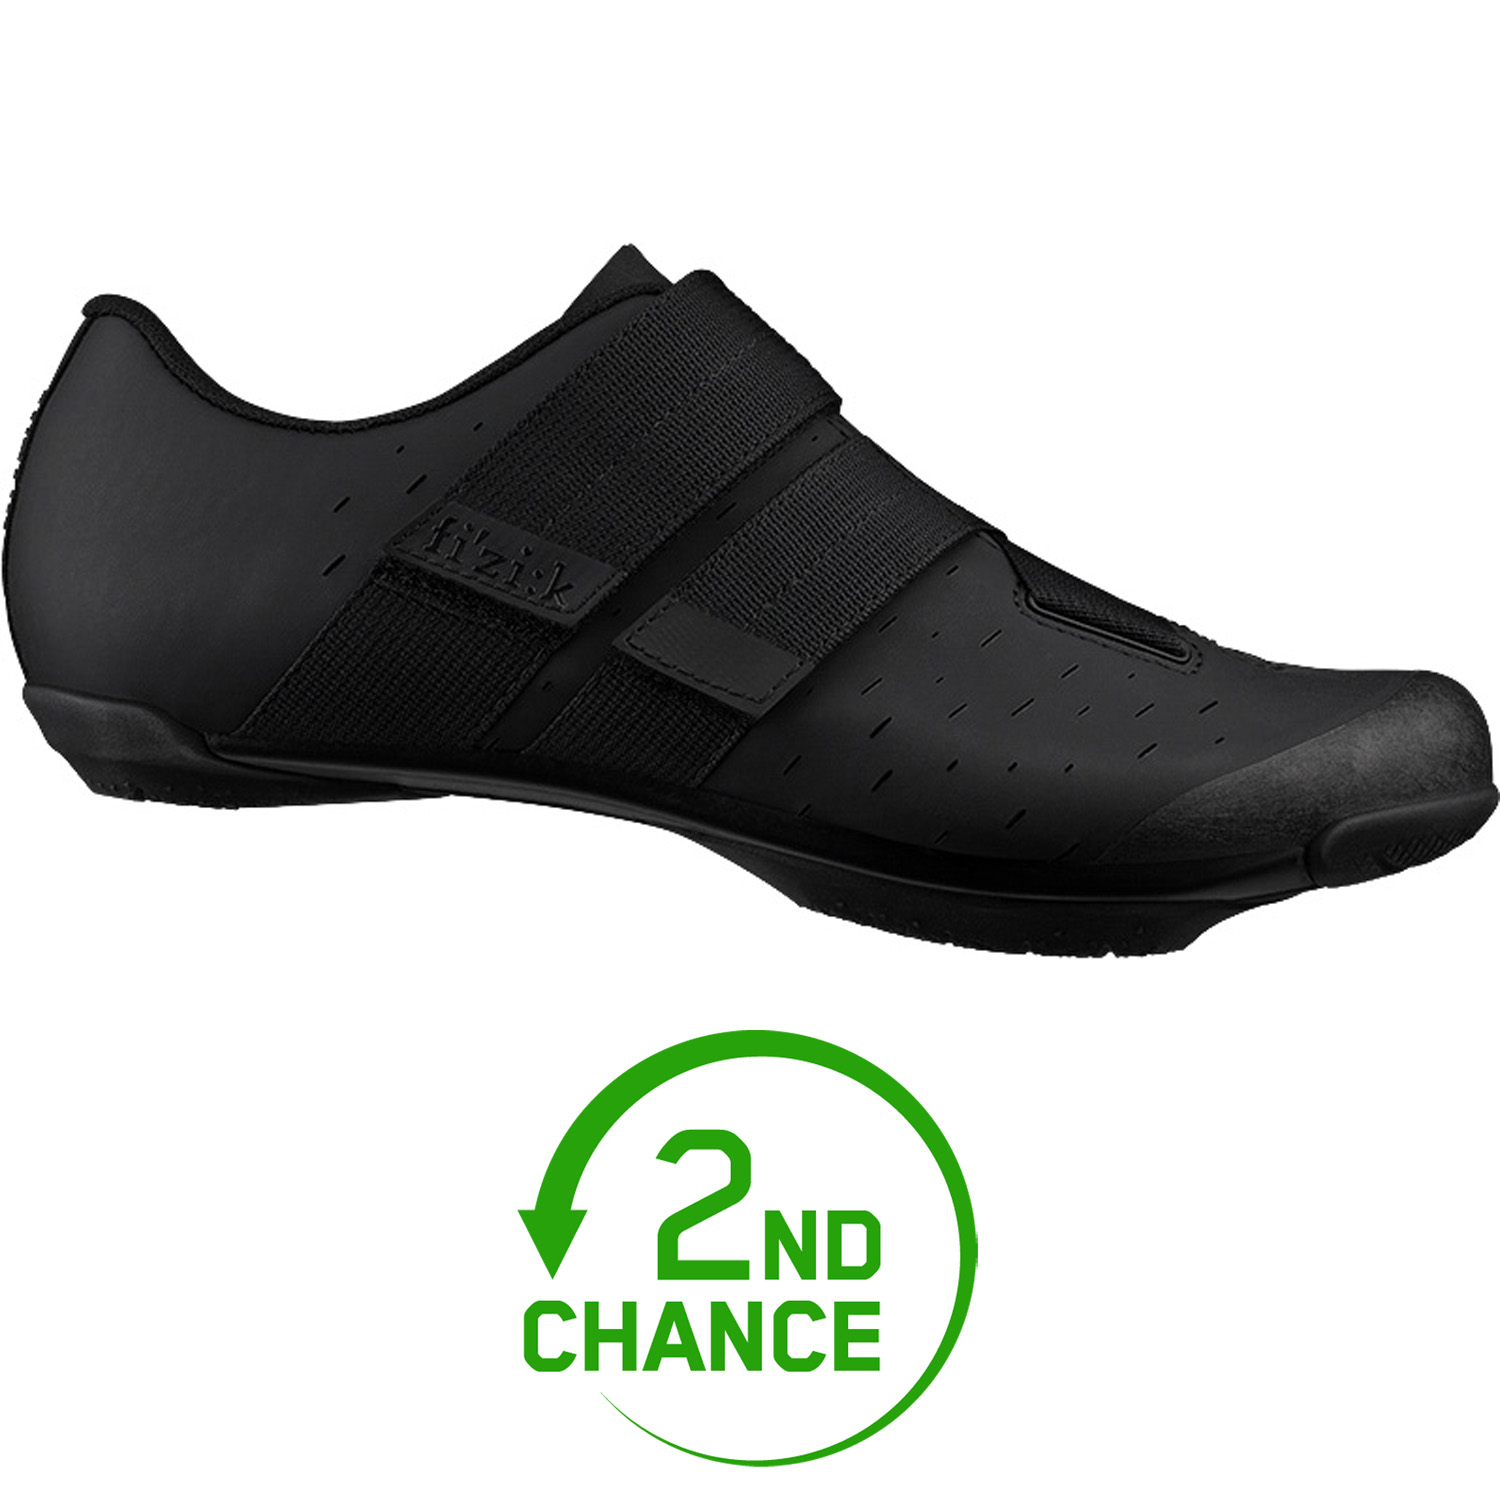 Picture of Fizik Terra Powerstrap X4 Gravel Shoes Unisex - black/black - 2nd Choice